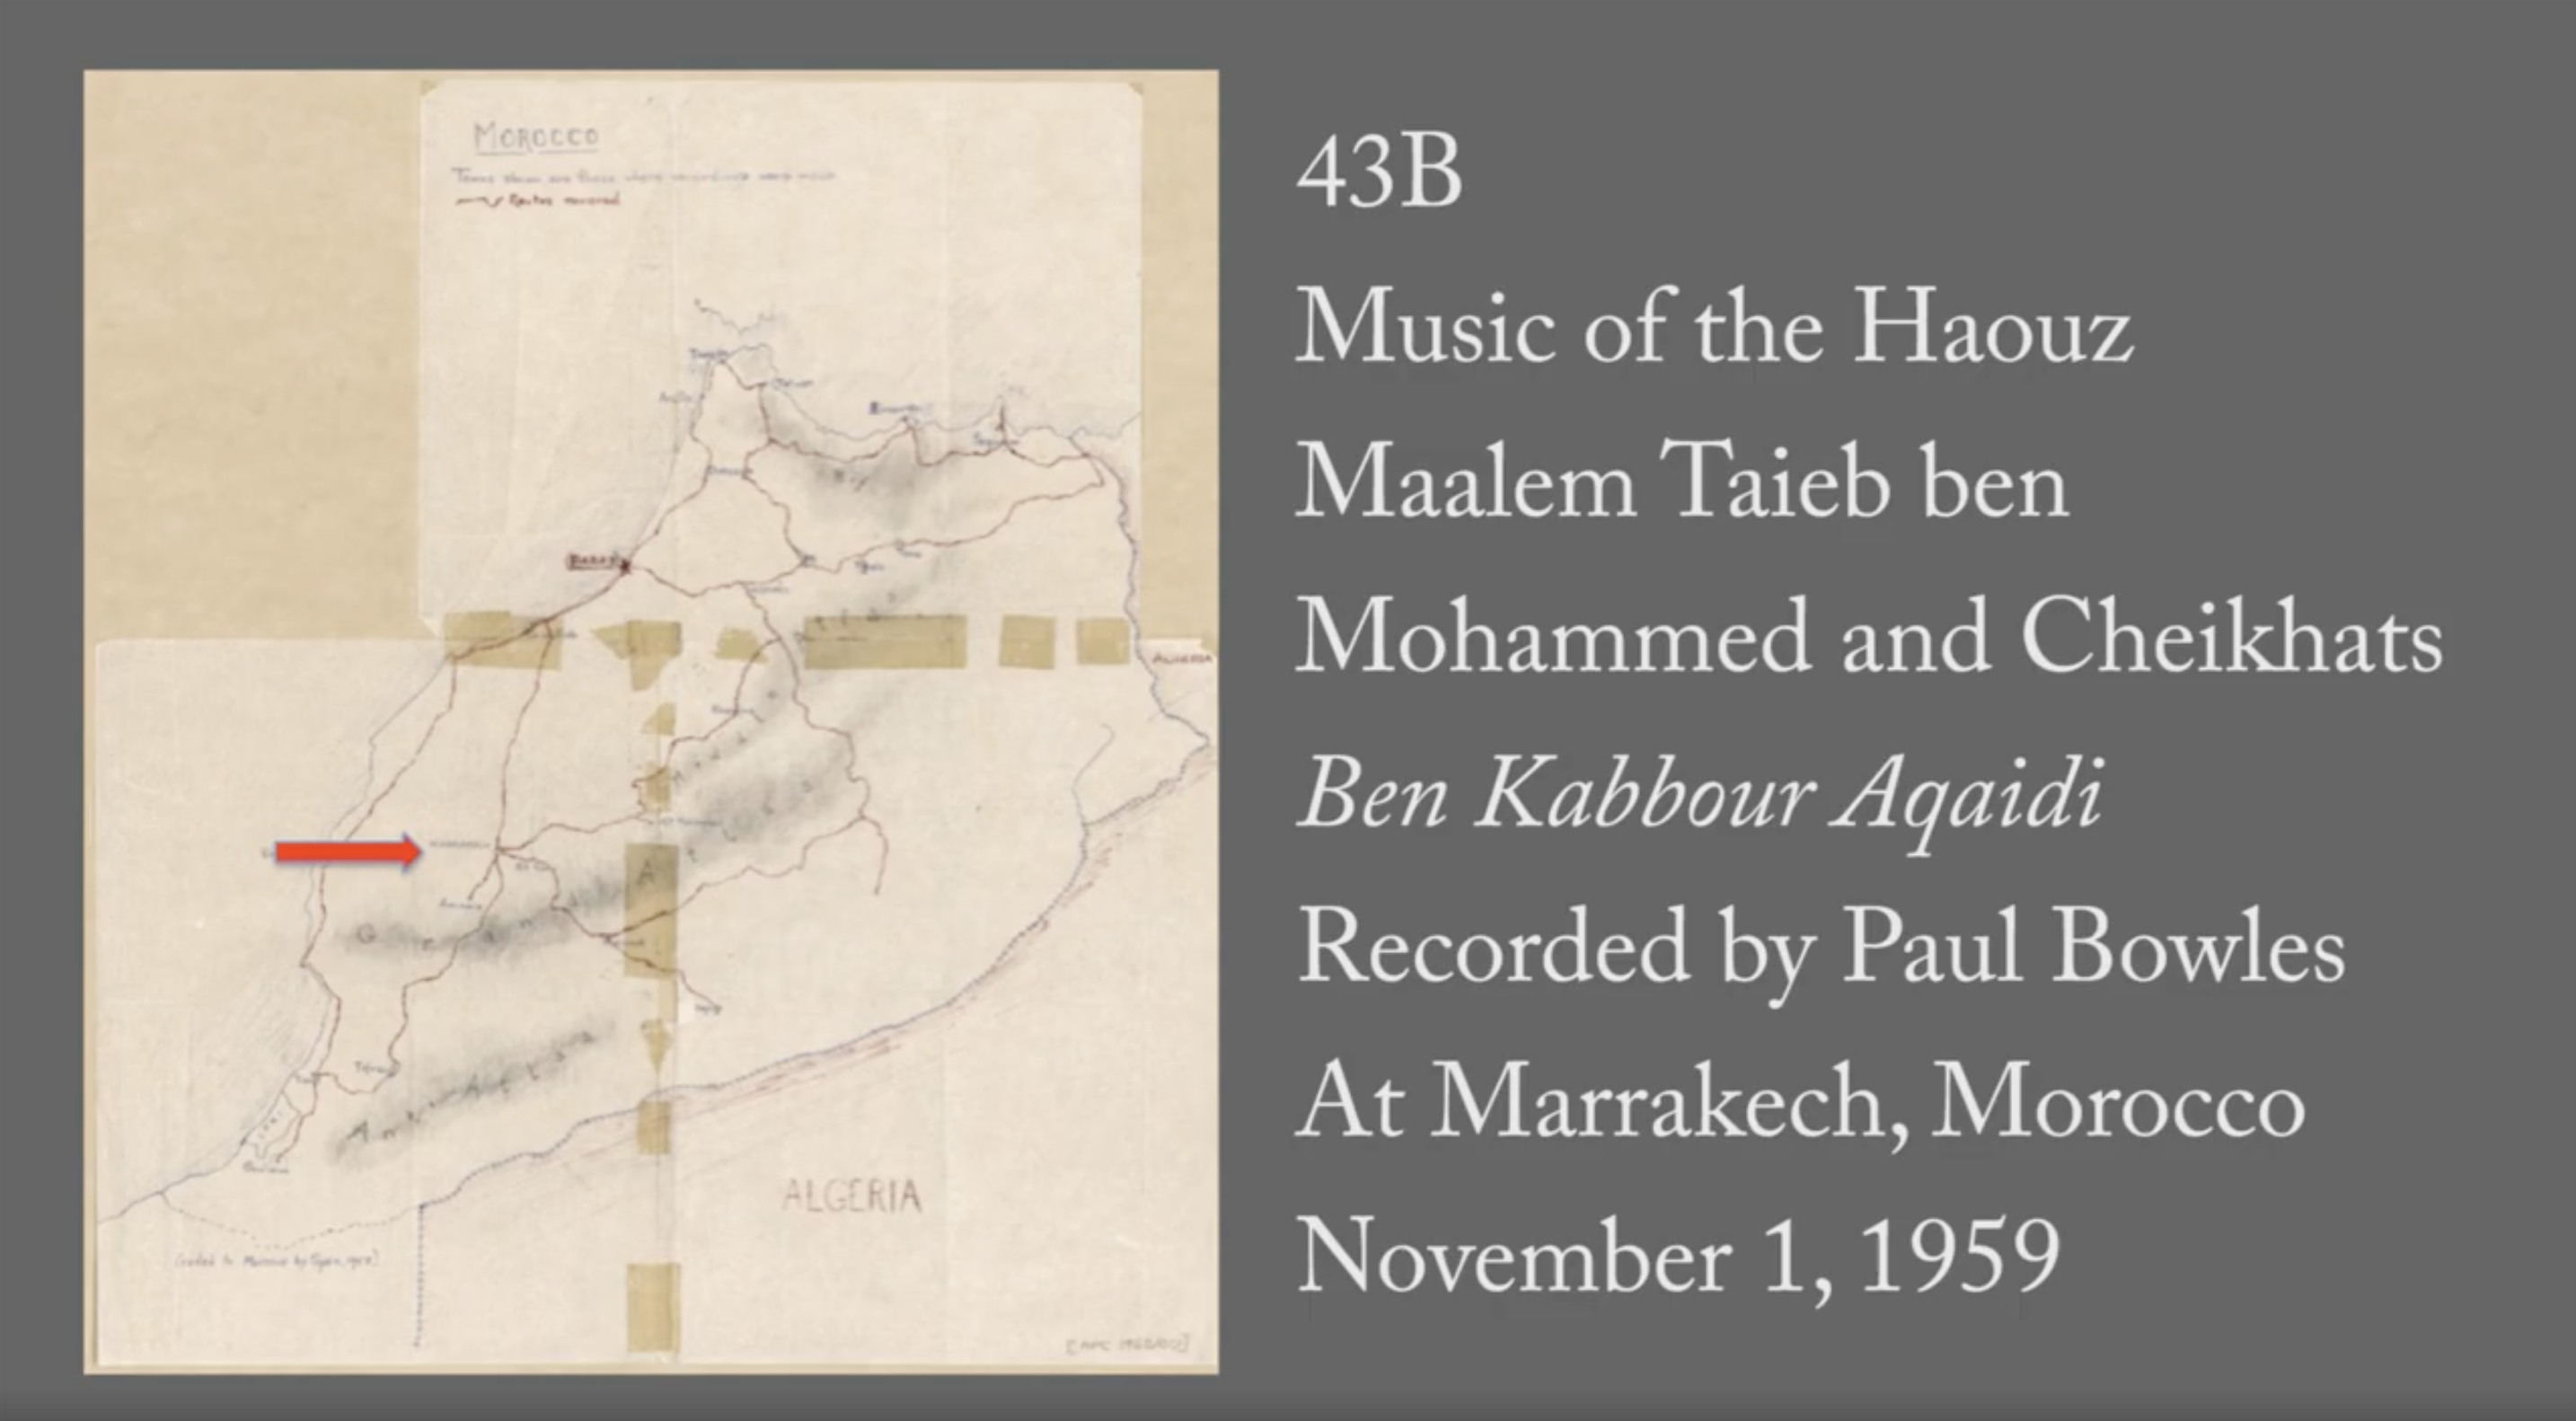  Maalem Taieb ben Mbarek - 43B: "Ben Kabbour Aqaidi"(Music of the Haouz)